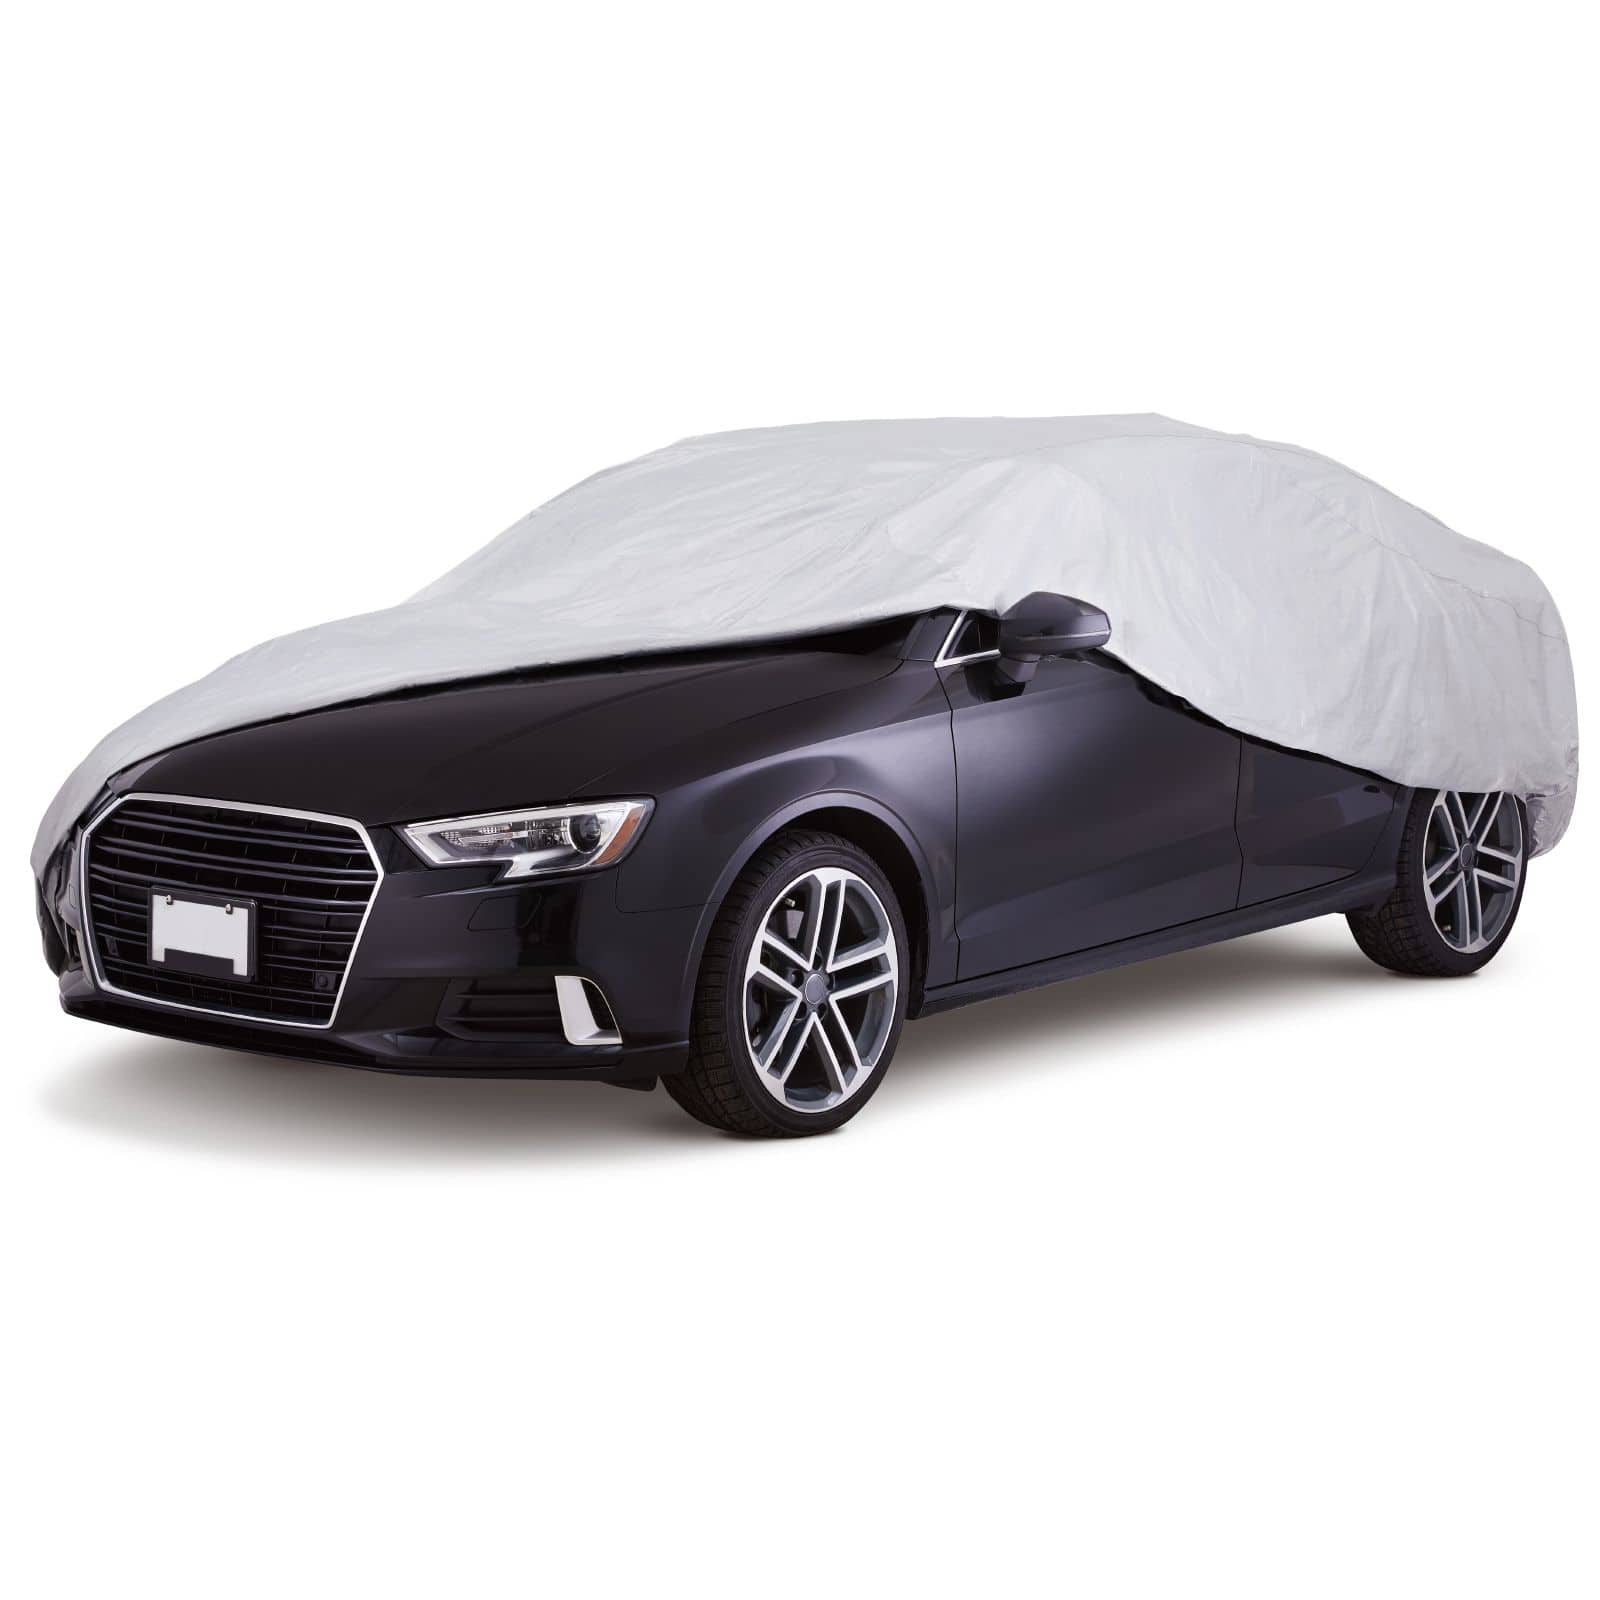 https://media-www.canadiantire.ca/product/automotive/car-care-accessories/auto-shelters-and-car-covers/0412685/simoniz-solar-shield-small-car-cover-a771e20e-dd76-47fa-a986-5dd26de01665-jpgrendition.jpg